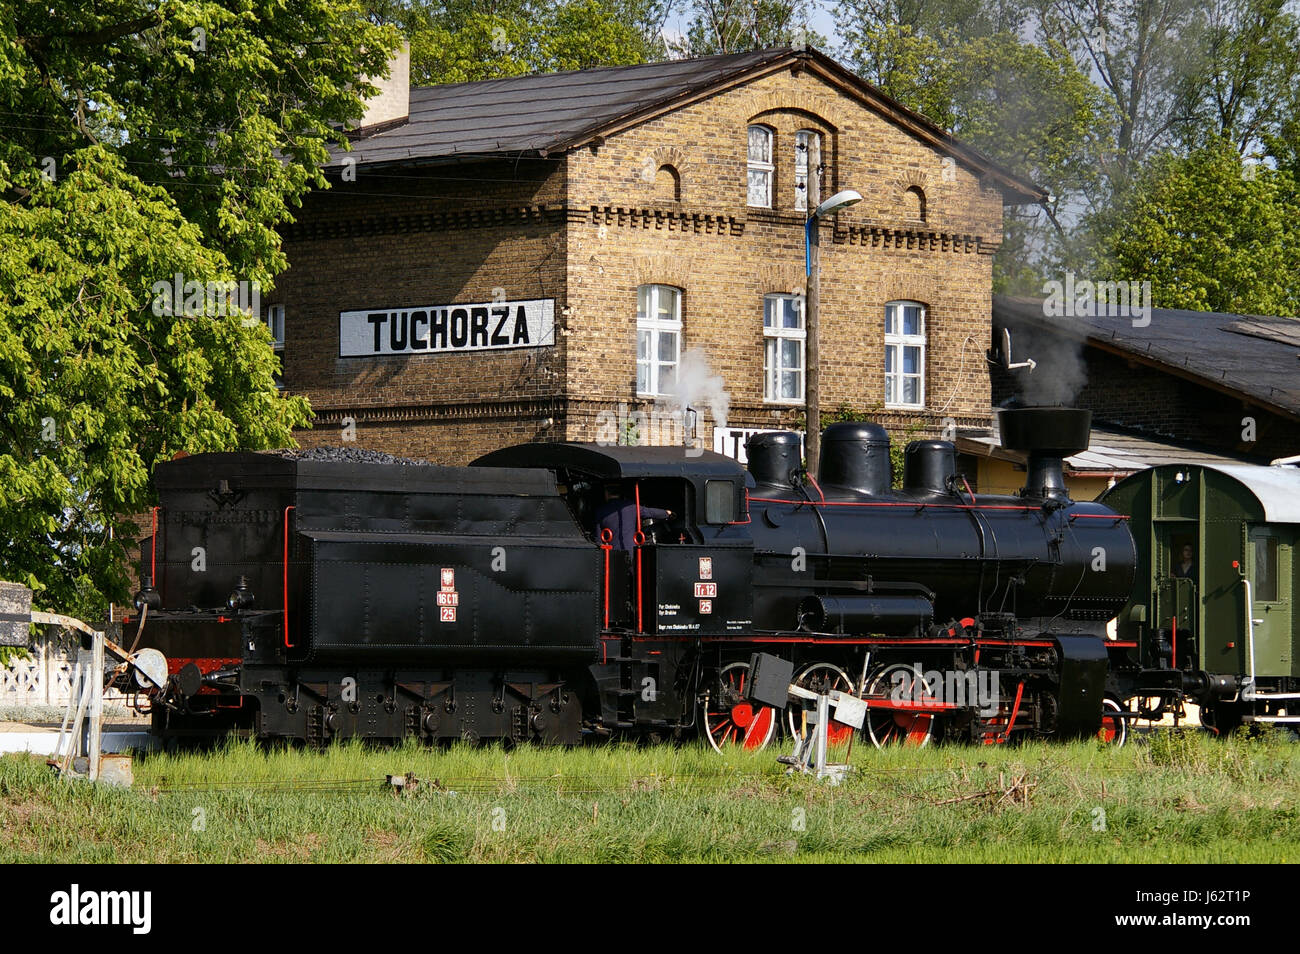 Polonia,tr 12,locomotora a vapor,wolsztyn,tuchorza Foto de stock